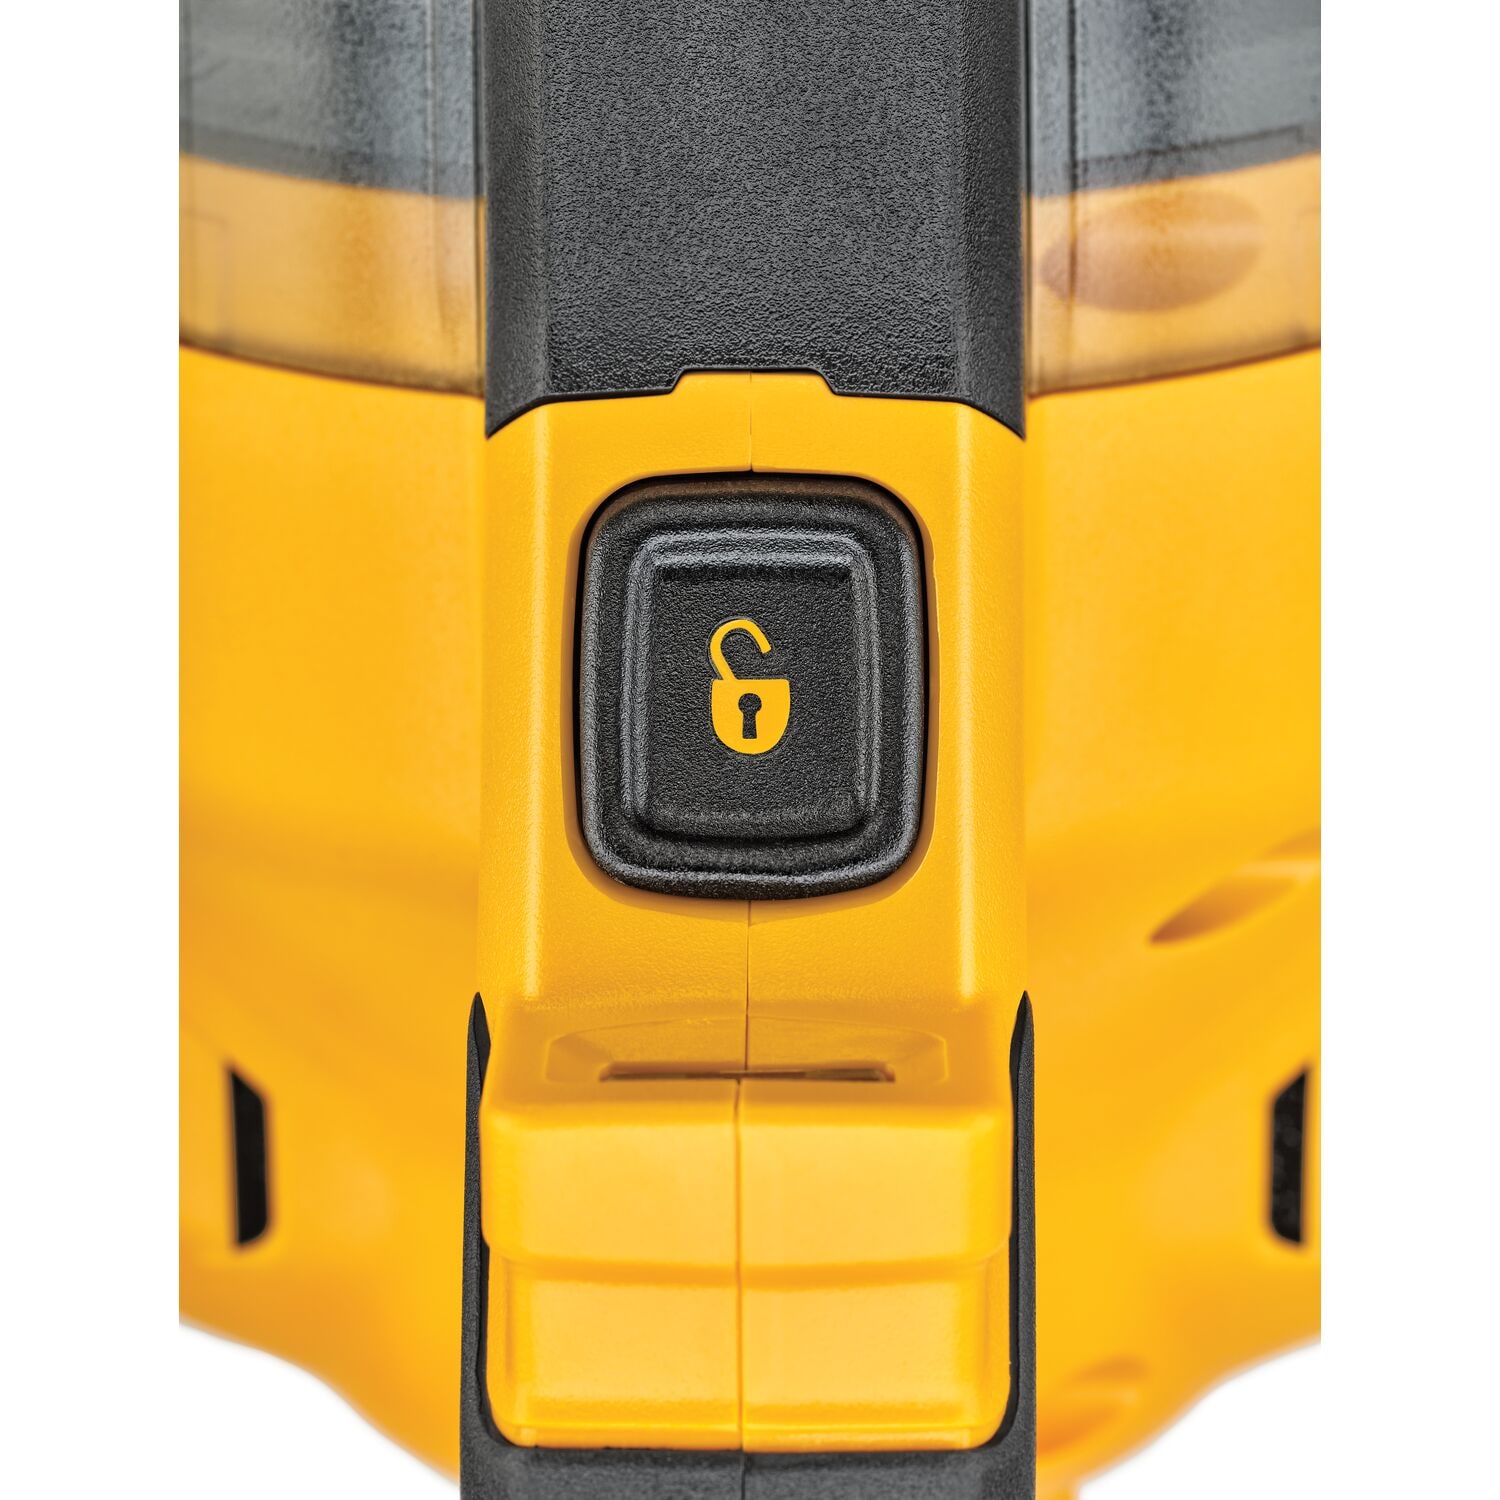 120W Cordless Handheld Vacuum Cleaner for DeWALT 20V 60V Max Battery  (Battery NOT Included) Portable for Hard Floor Carpet Car Pet Hair Cleaning